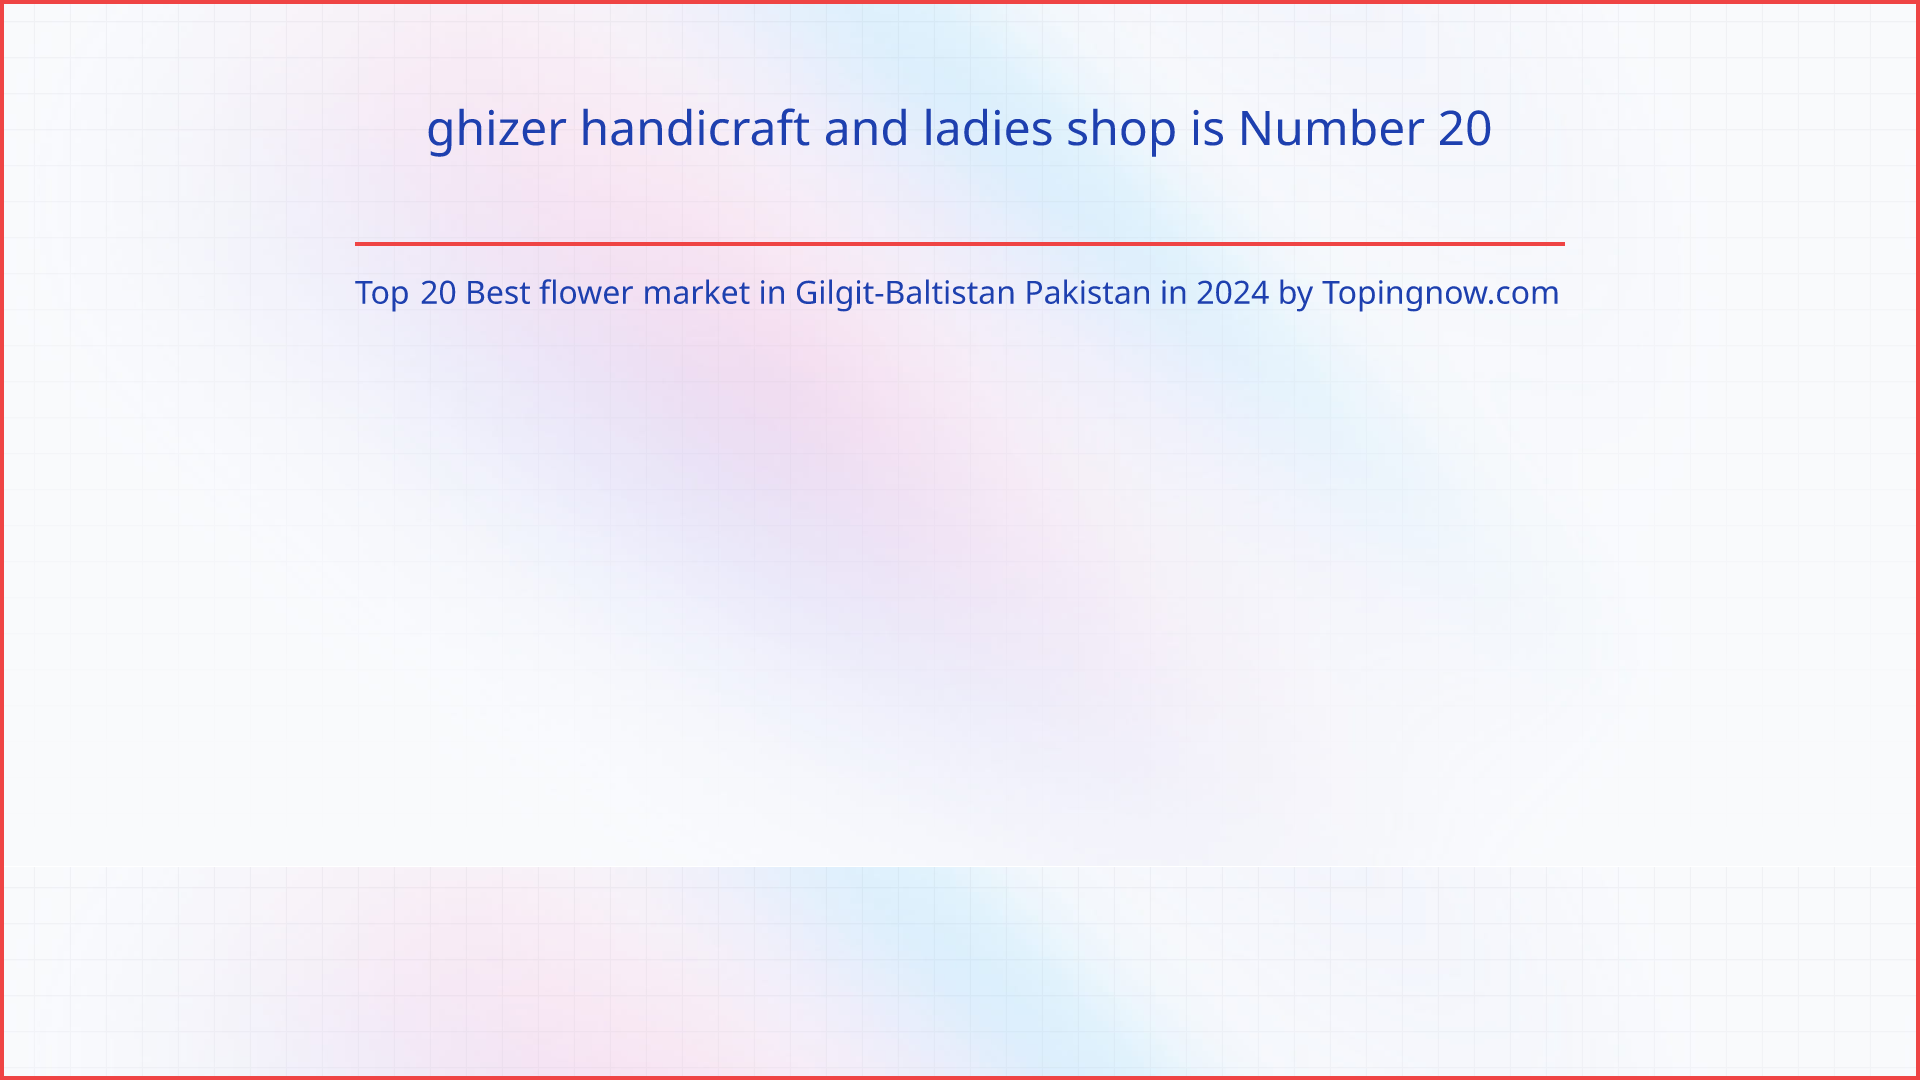 ghizer handicraft and ladies shop: Top 20 Best flower market in Gilgit-Baltistan Pakistan in 2024